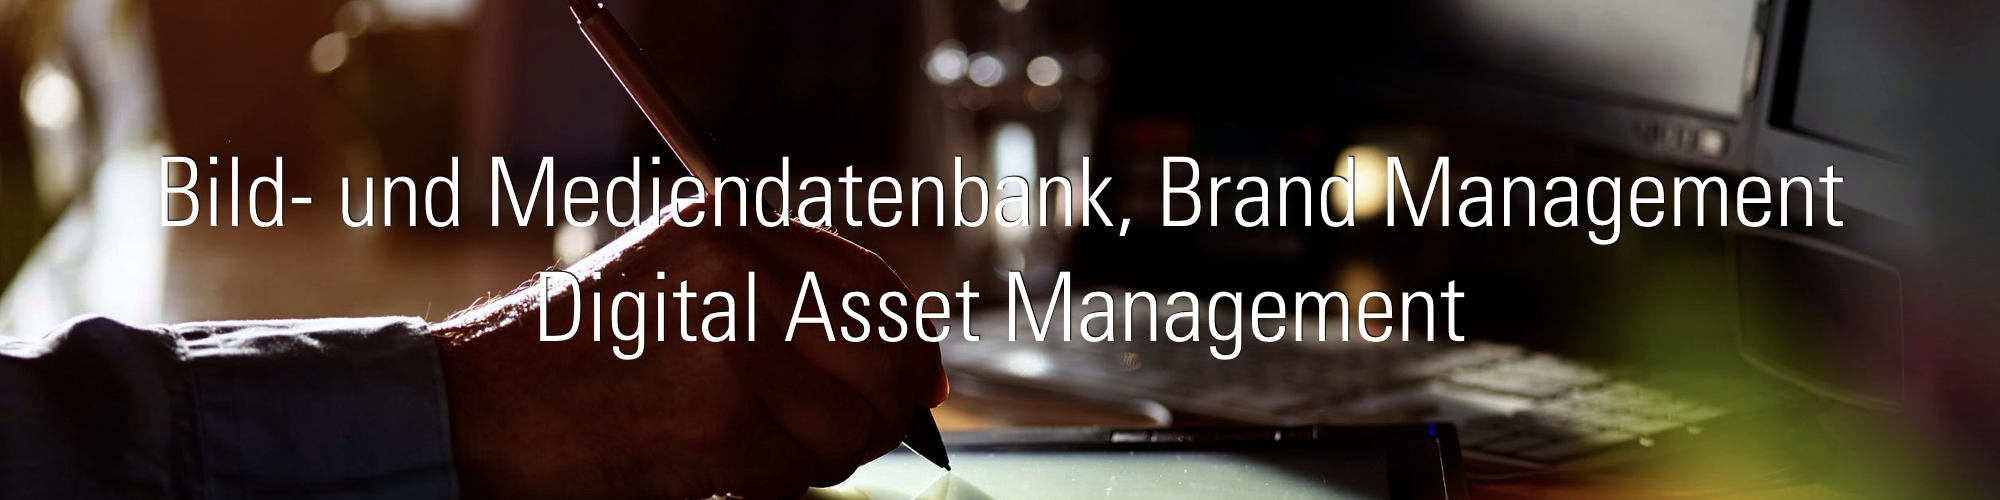 Bilddatenbank, Medienbank, Brand Management, DAM